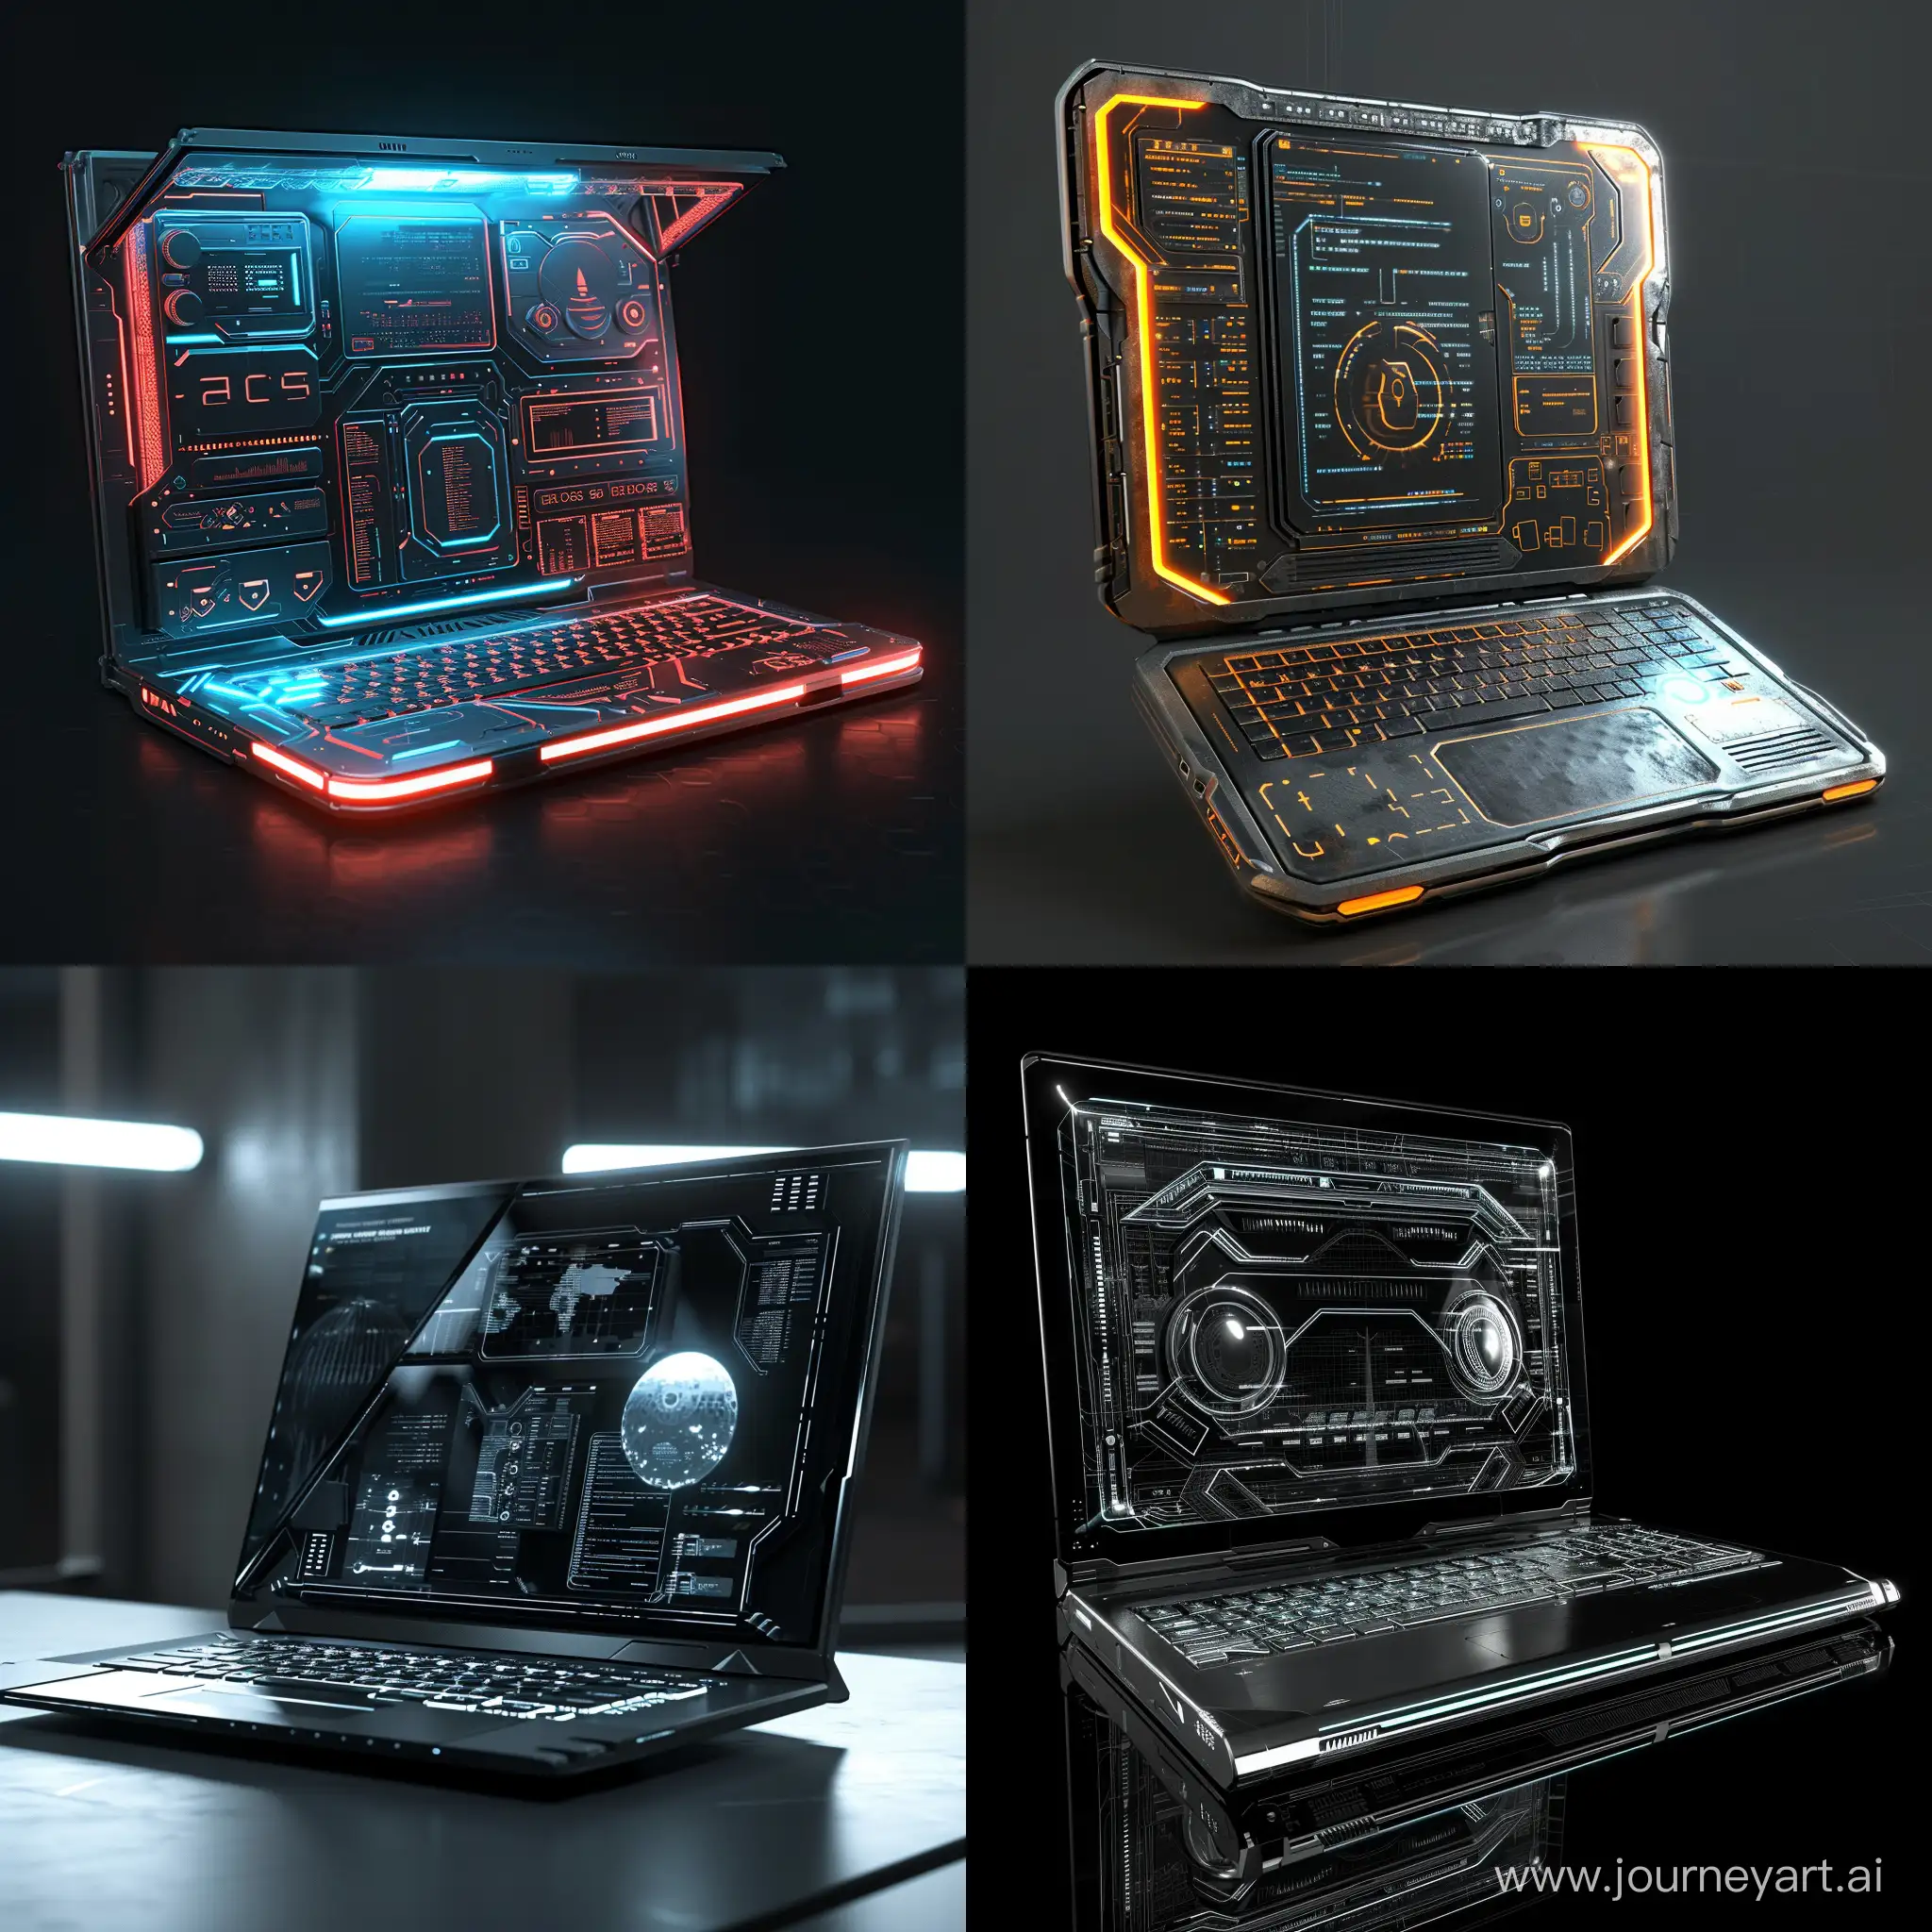 Futuristic-Laptop-in-Photorealistic-Artistic-Style